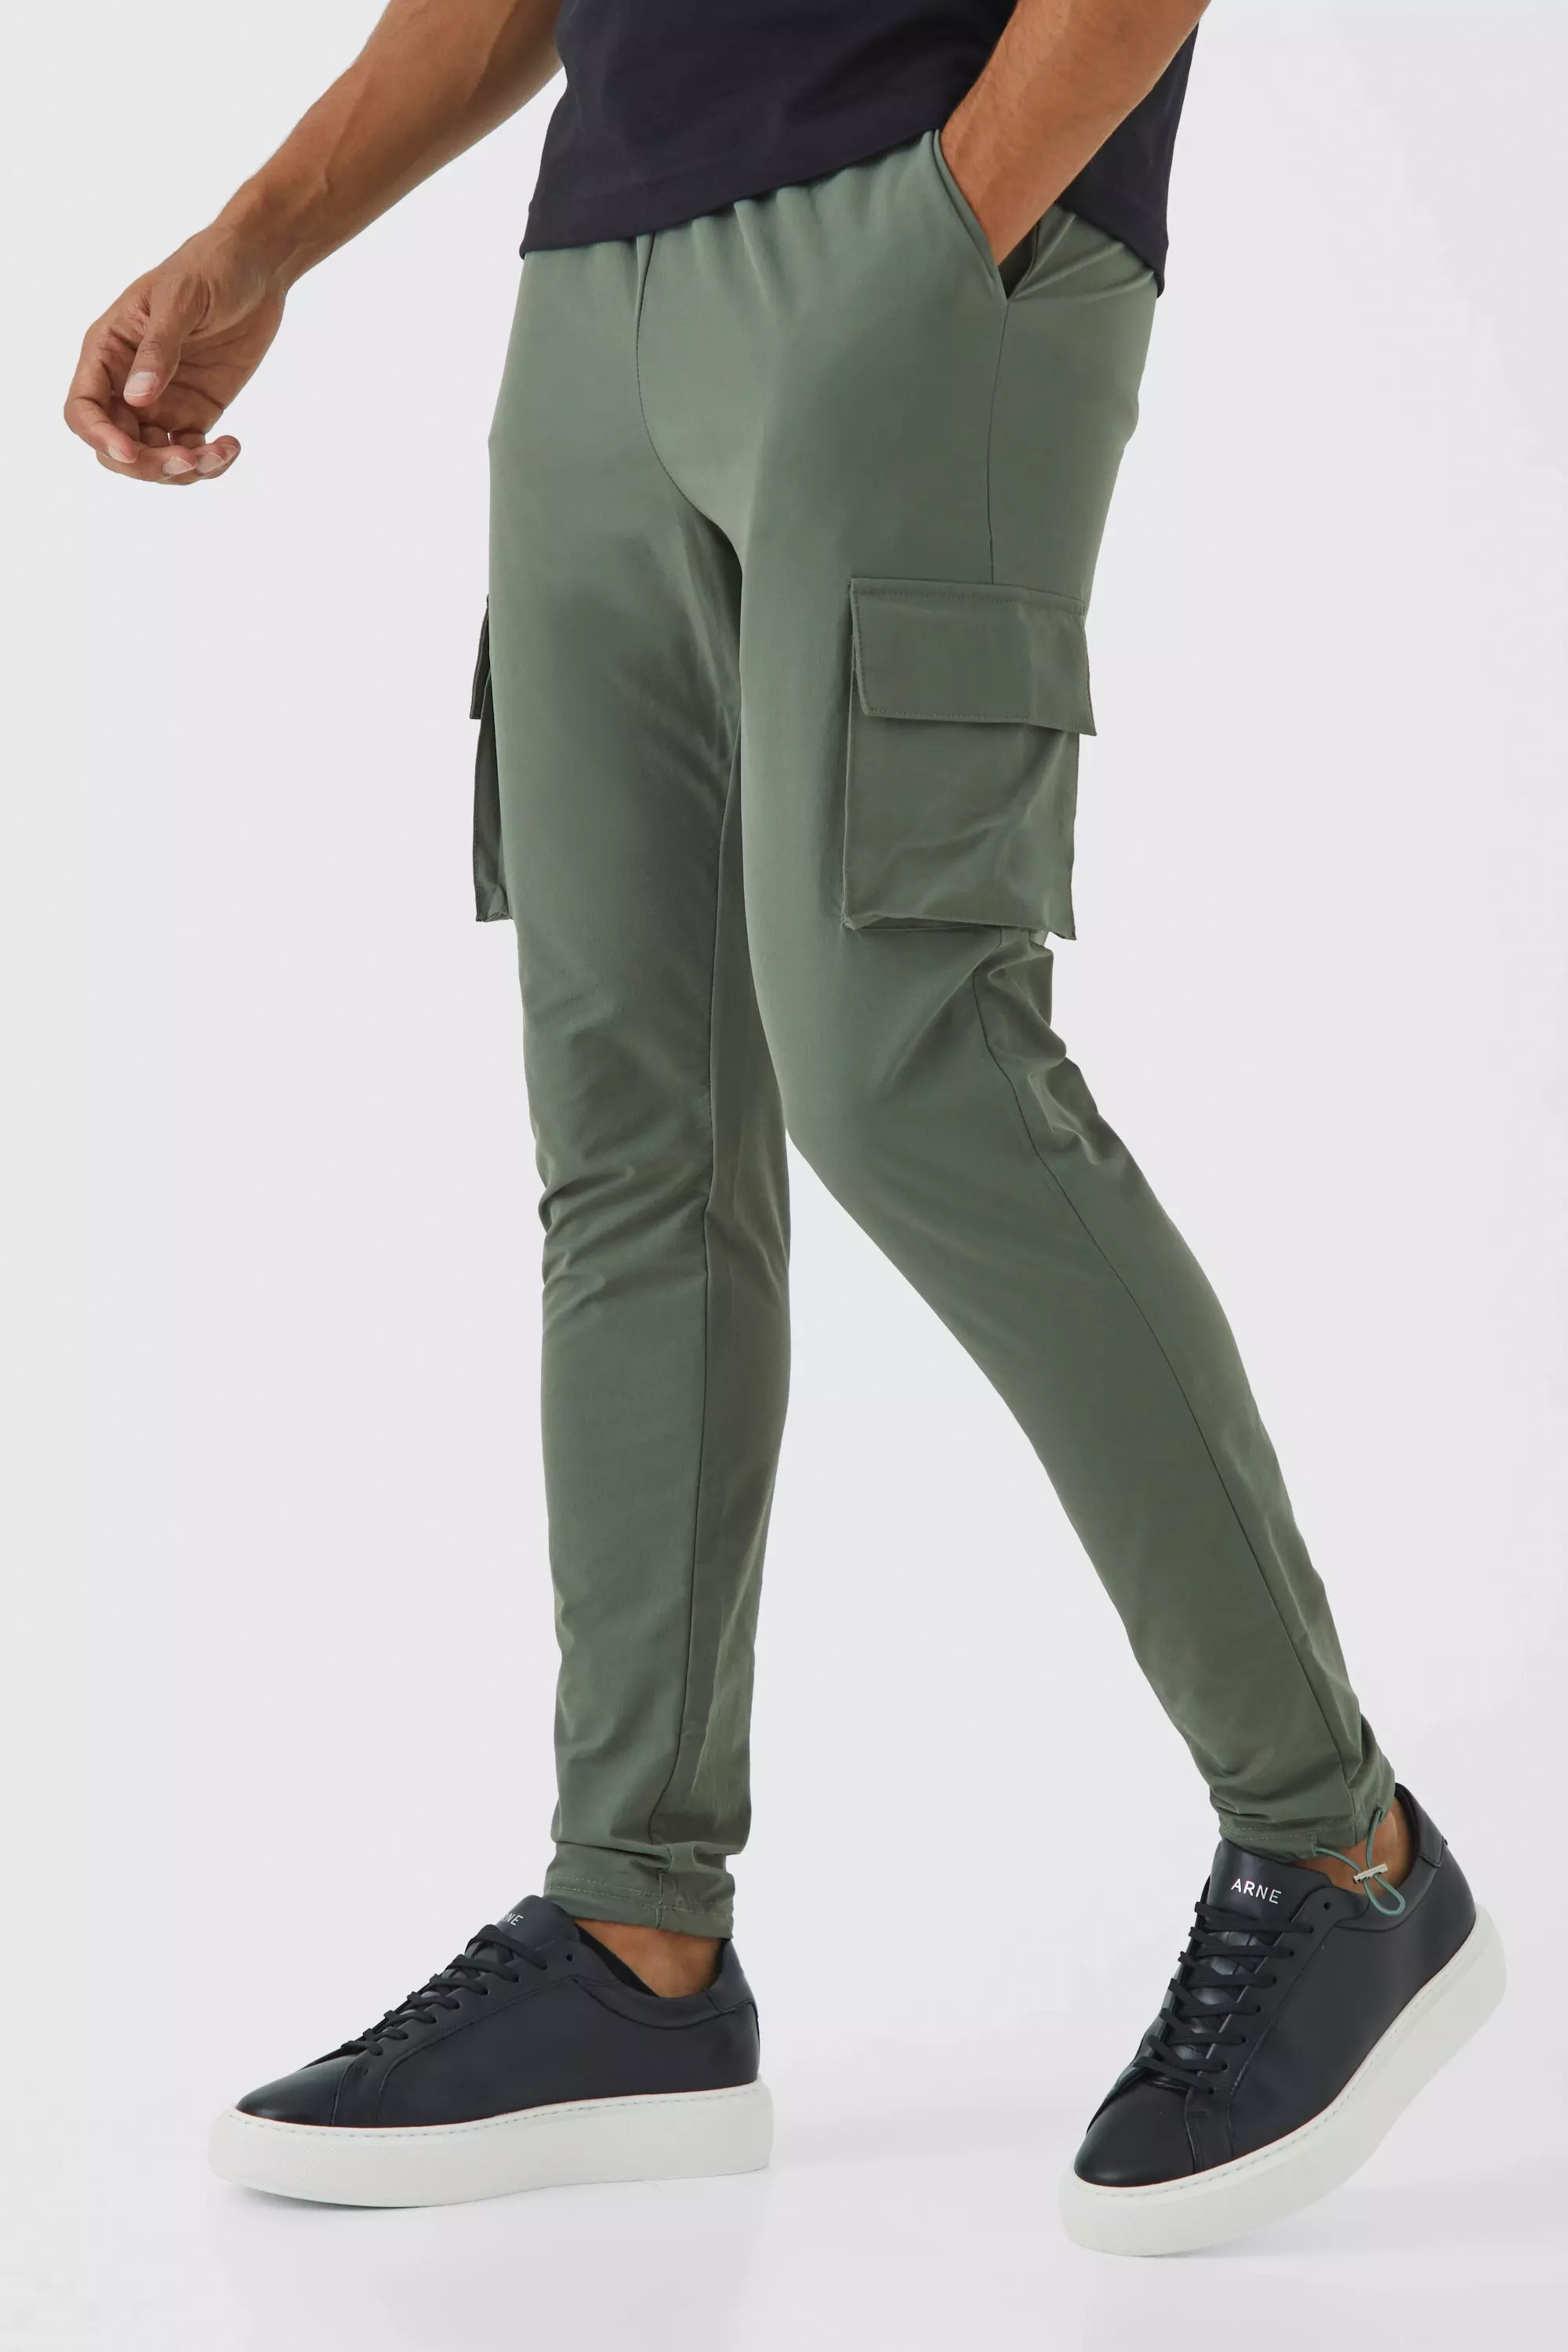 Elastic Lightweight Stretch Skinny Cargo Pants Khaki